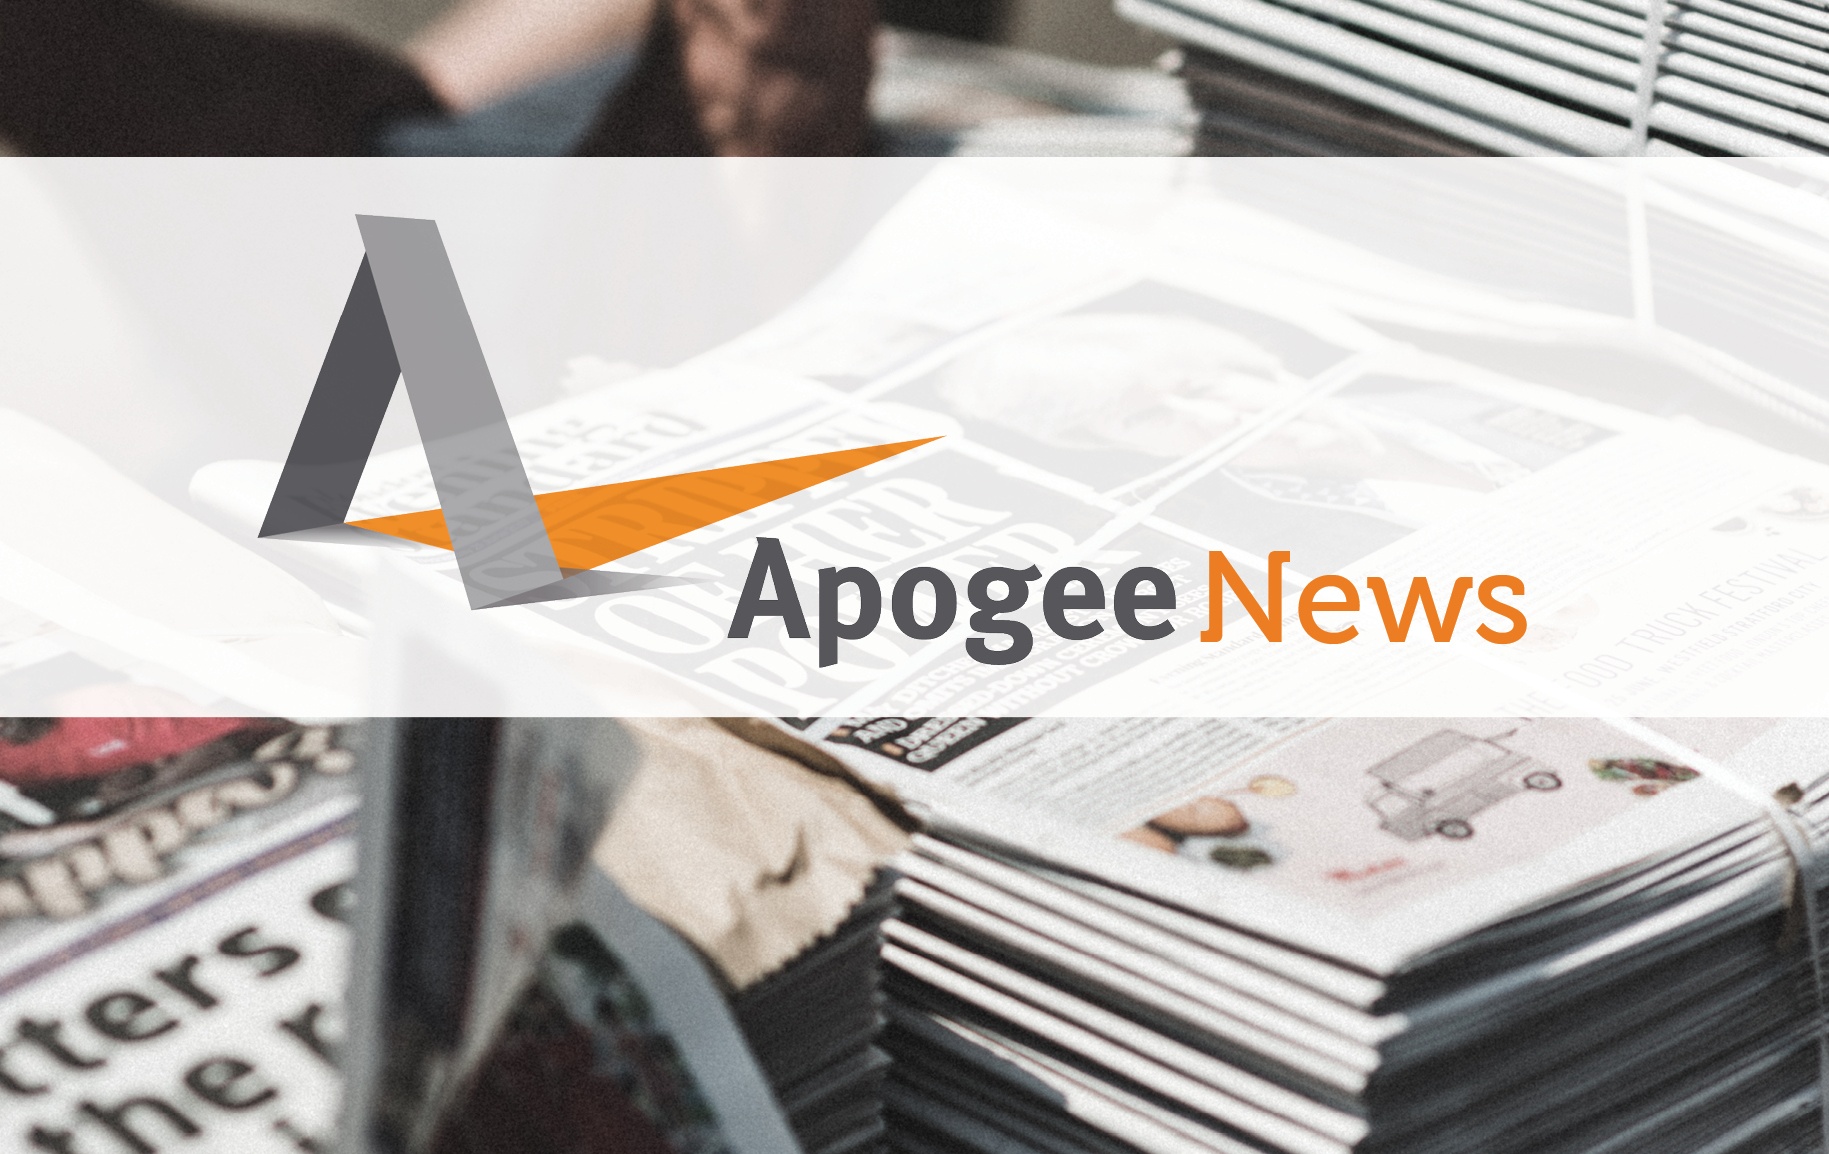 Apogee News